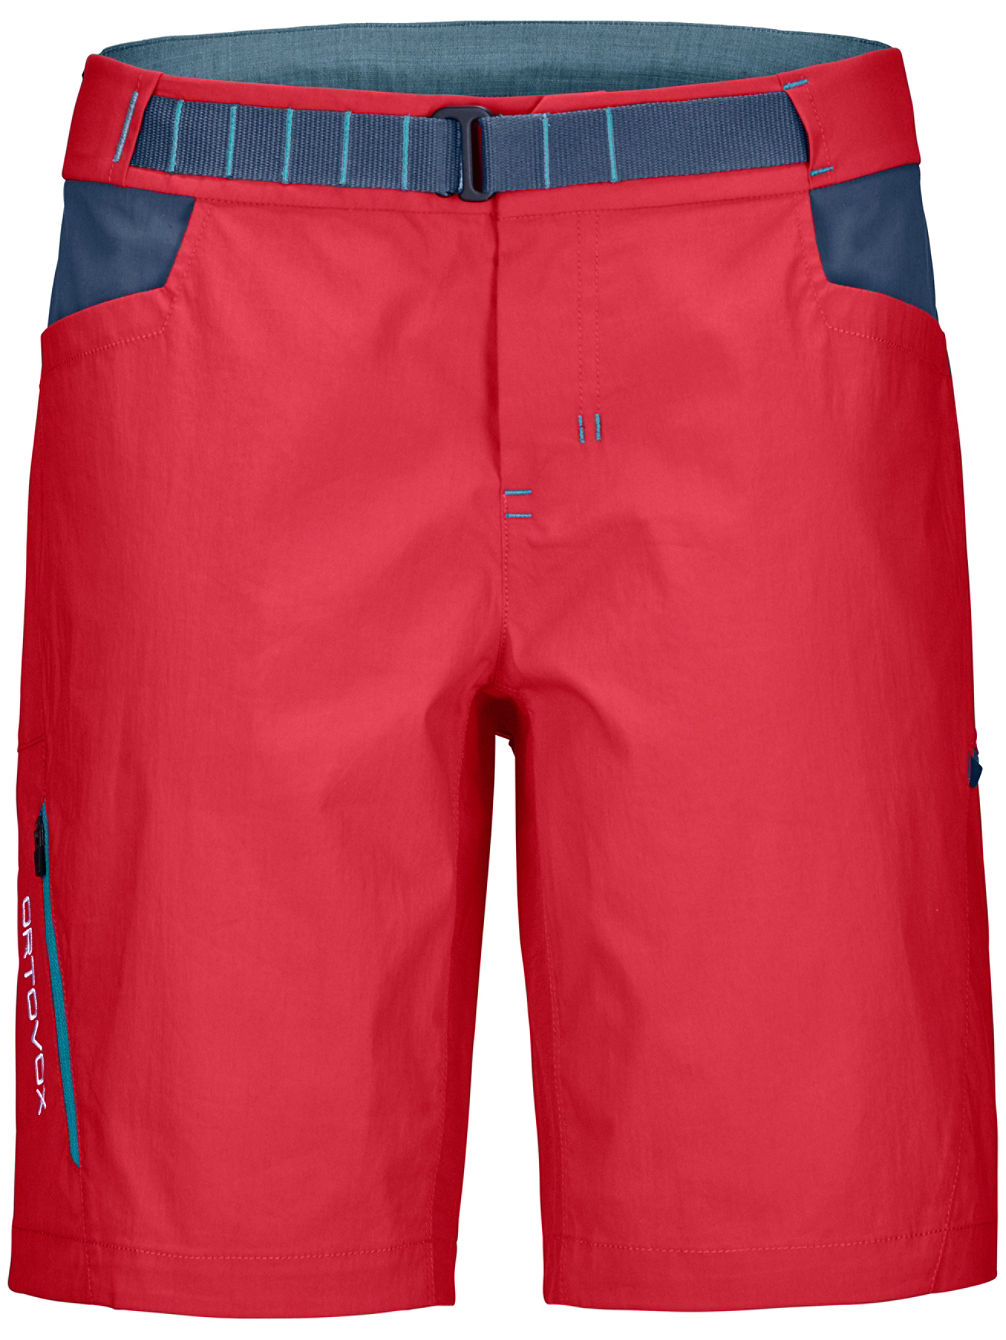 Colodri Outdoor Shorts